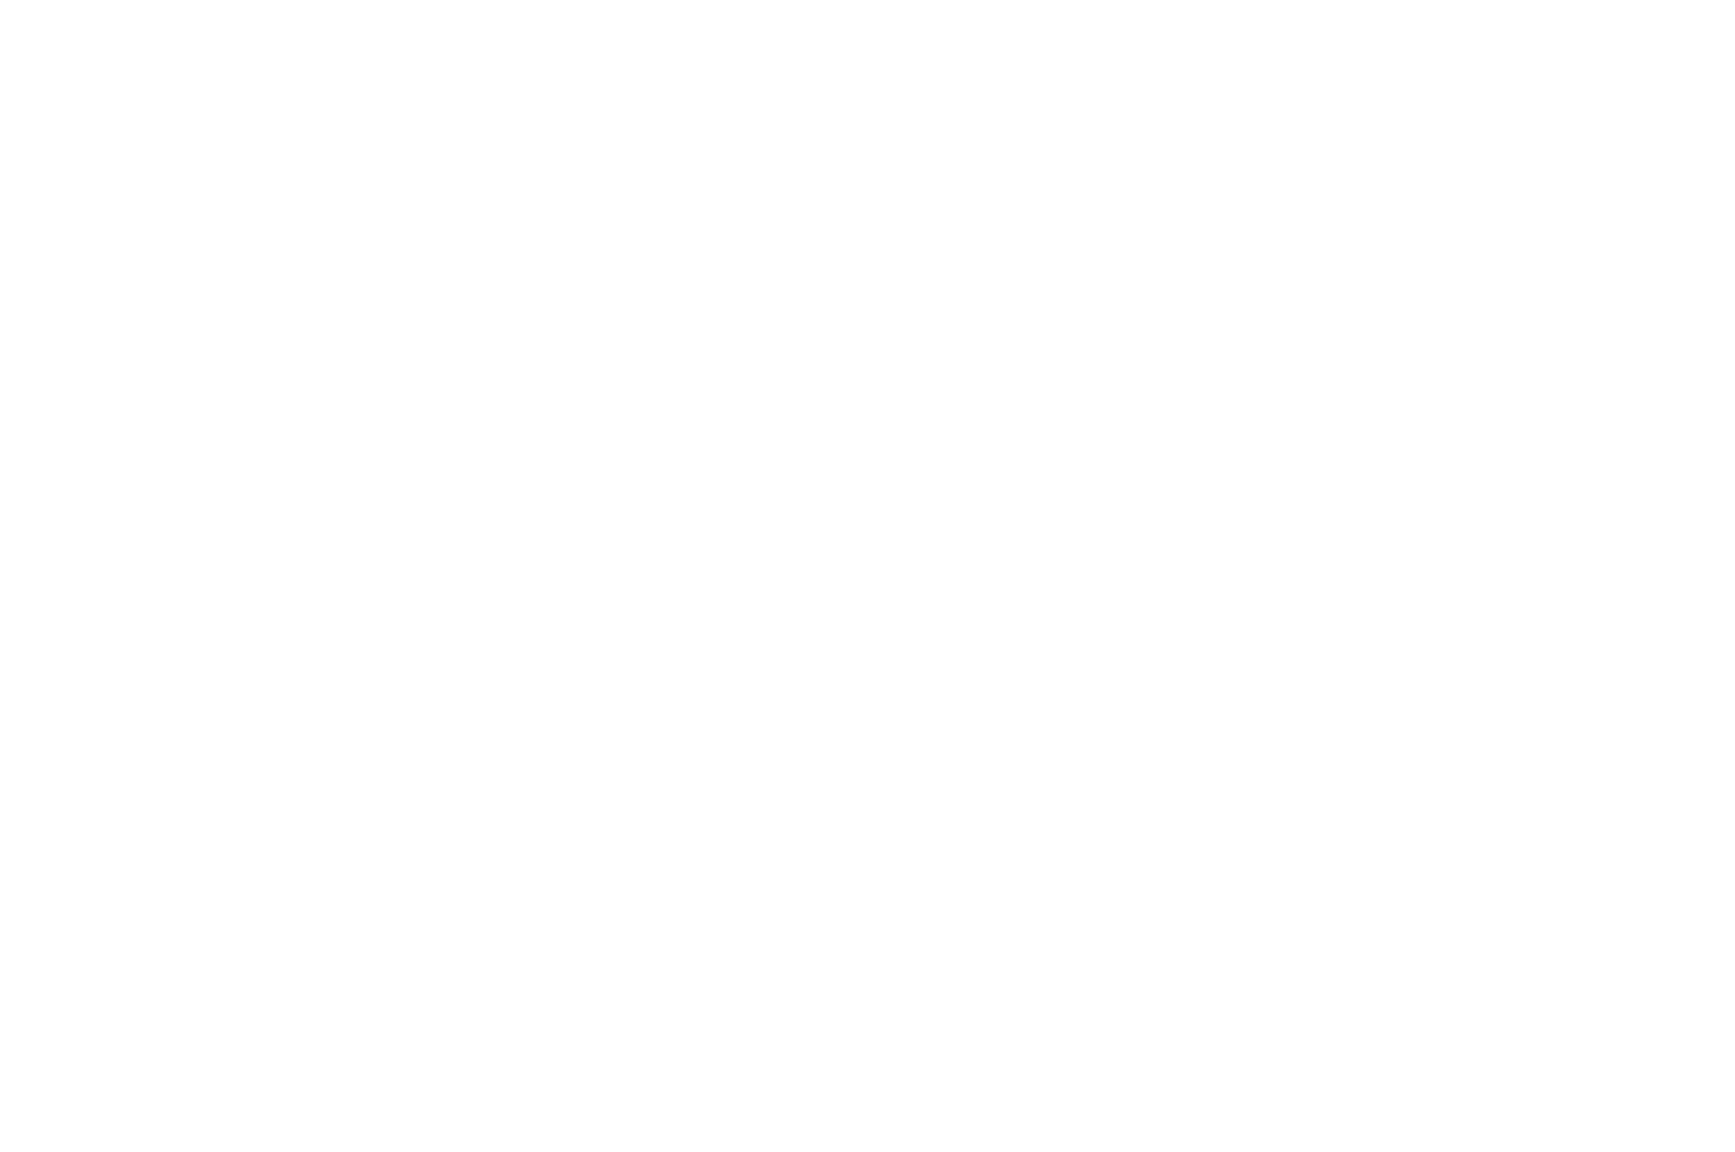 SILVER AWARD - VIRGIN SPRING CINEFEST - CALCUTTA